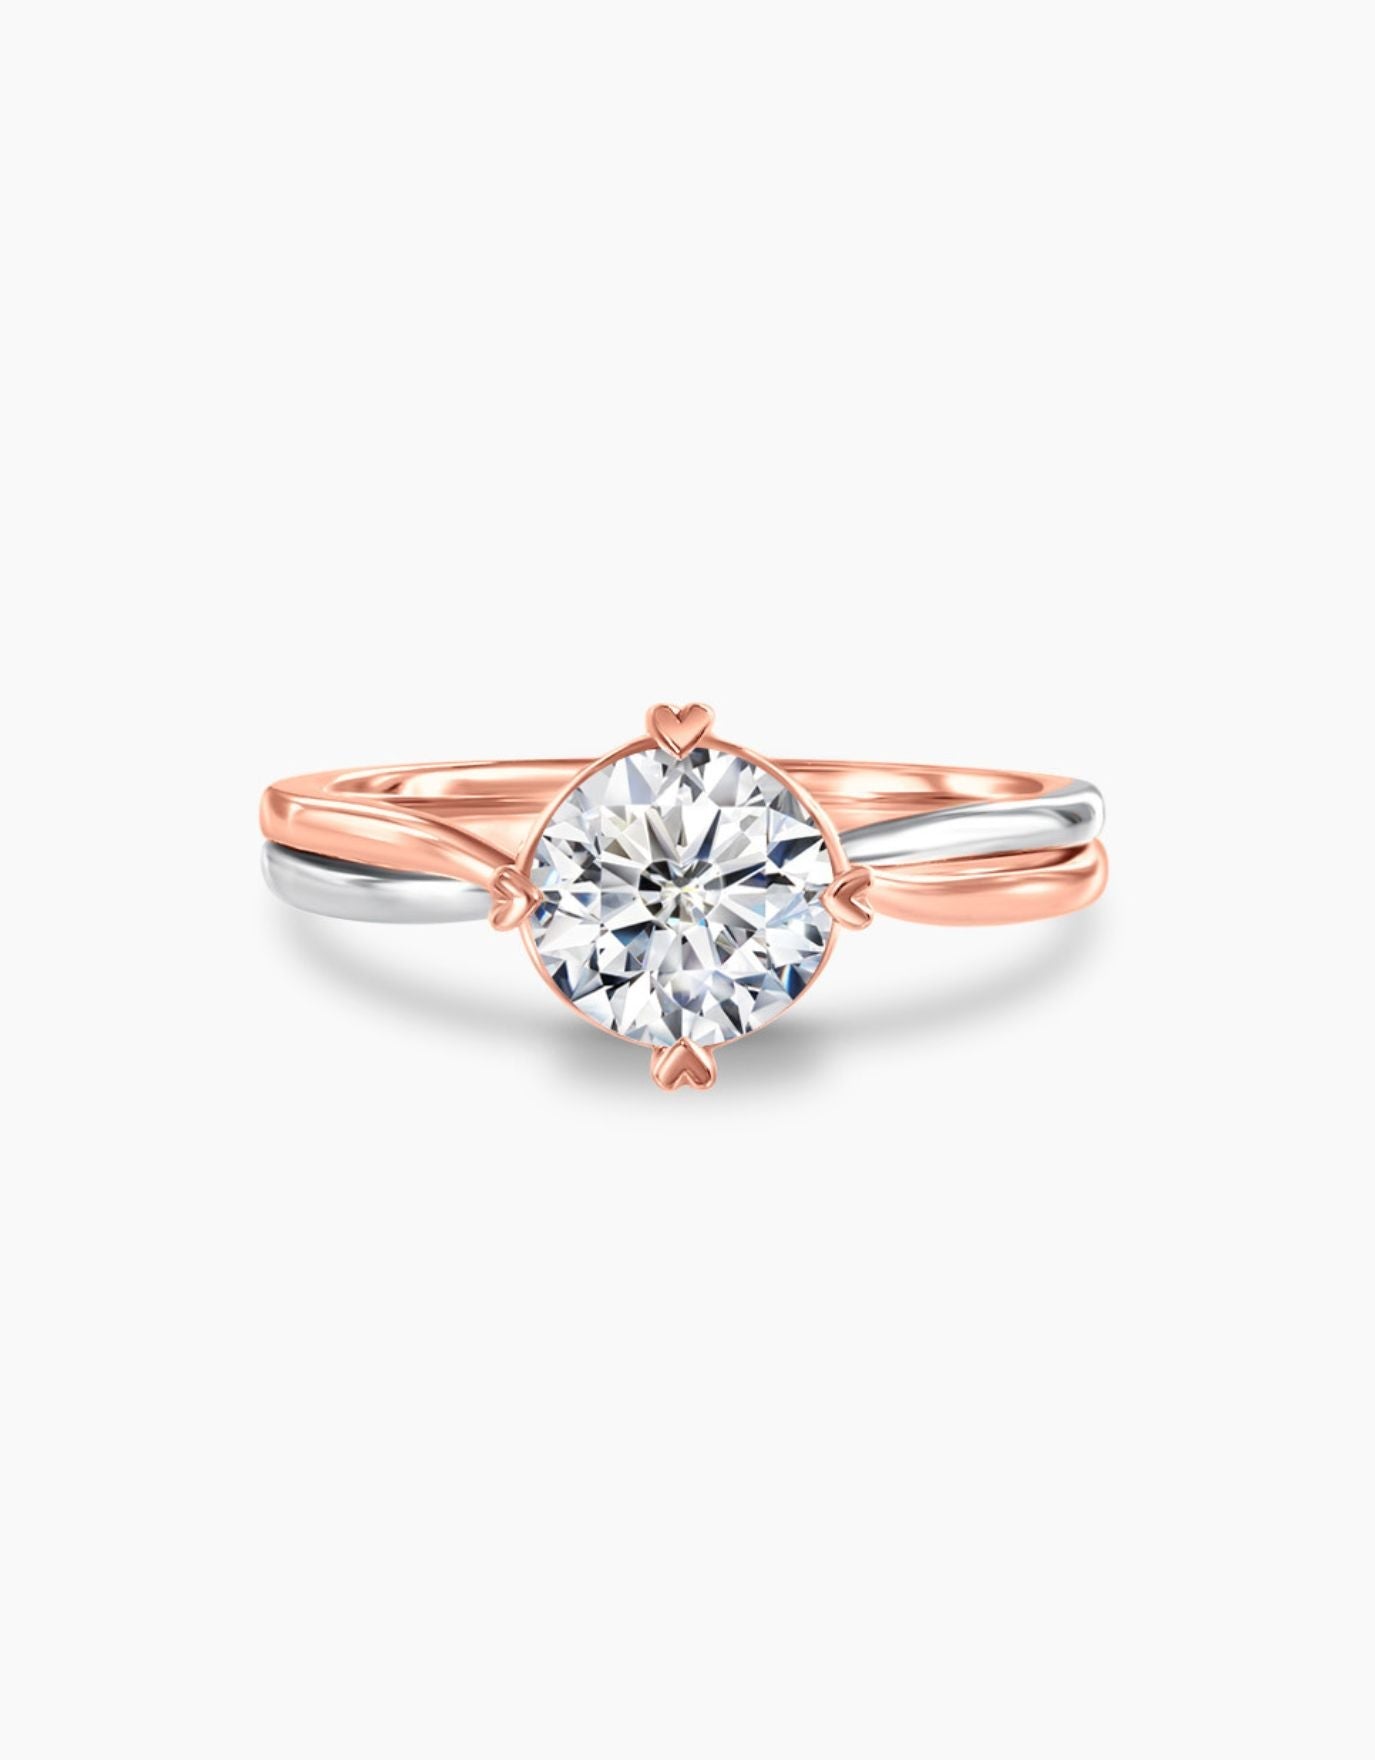 LVC Say Love™ Love Journey Carita Diamond Ring - 0.7ct